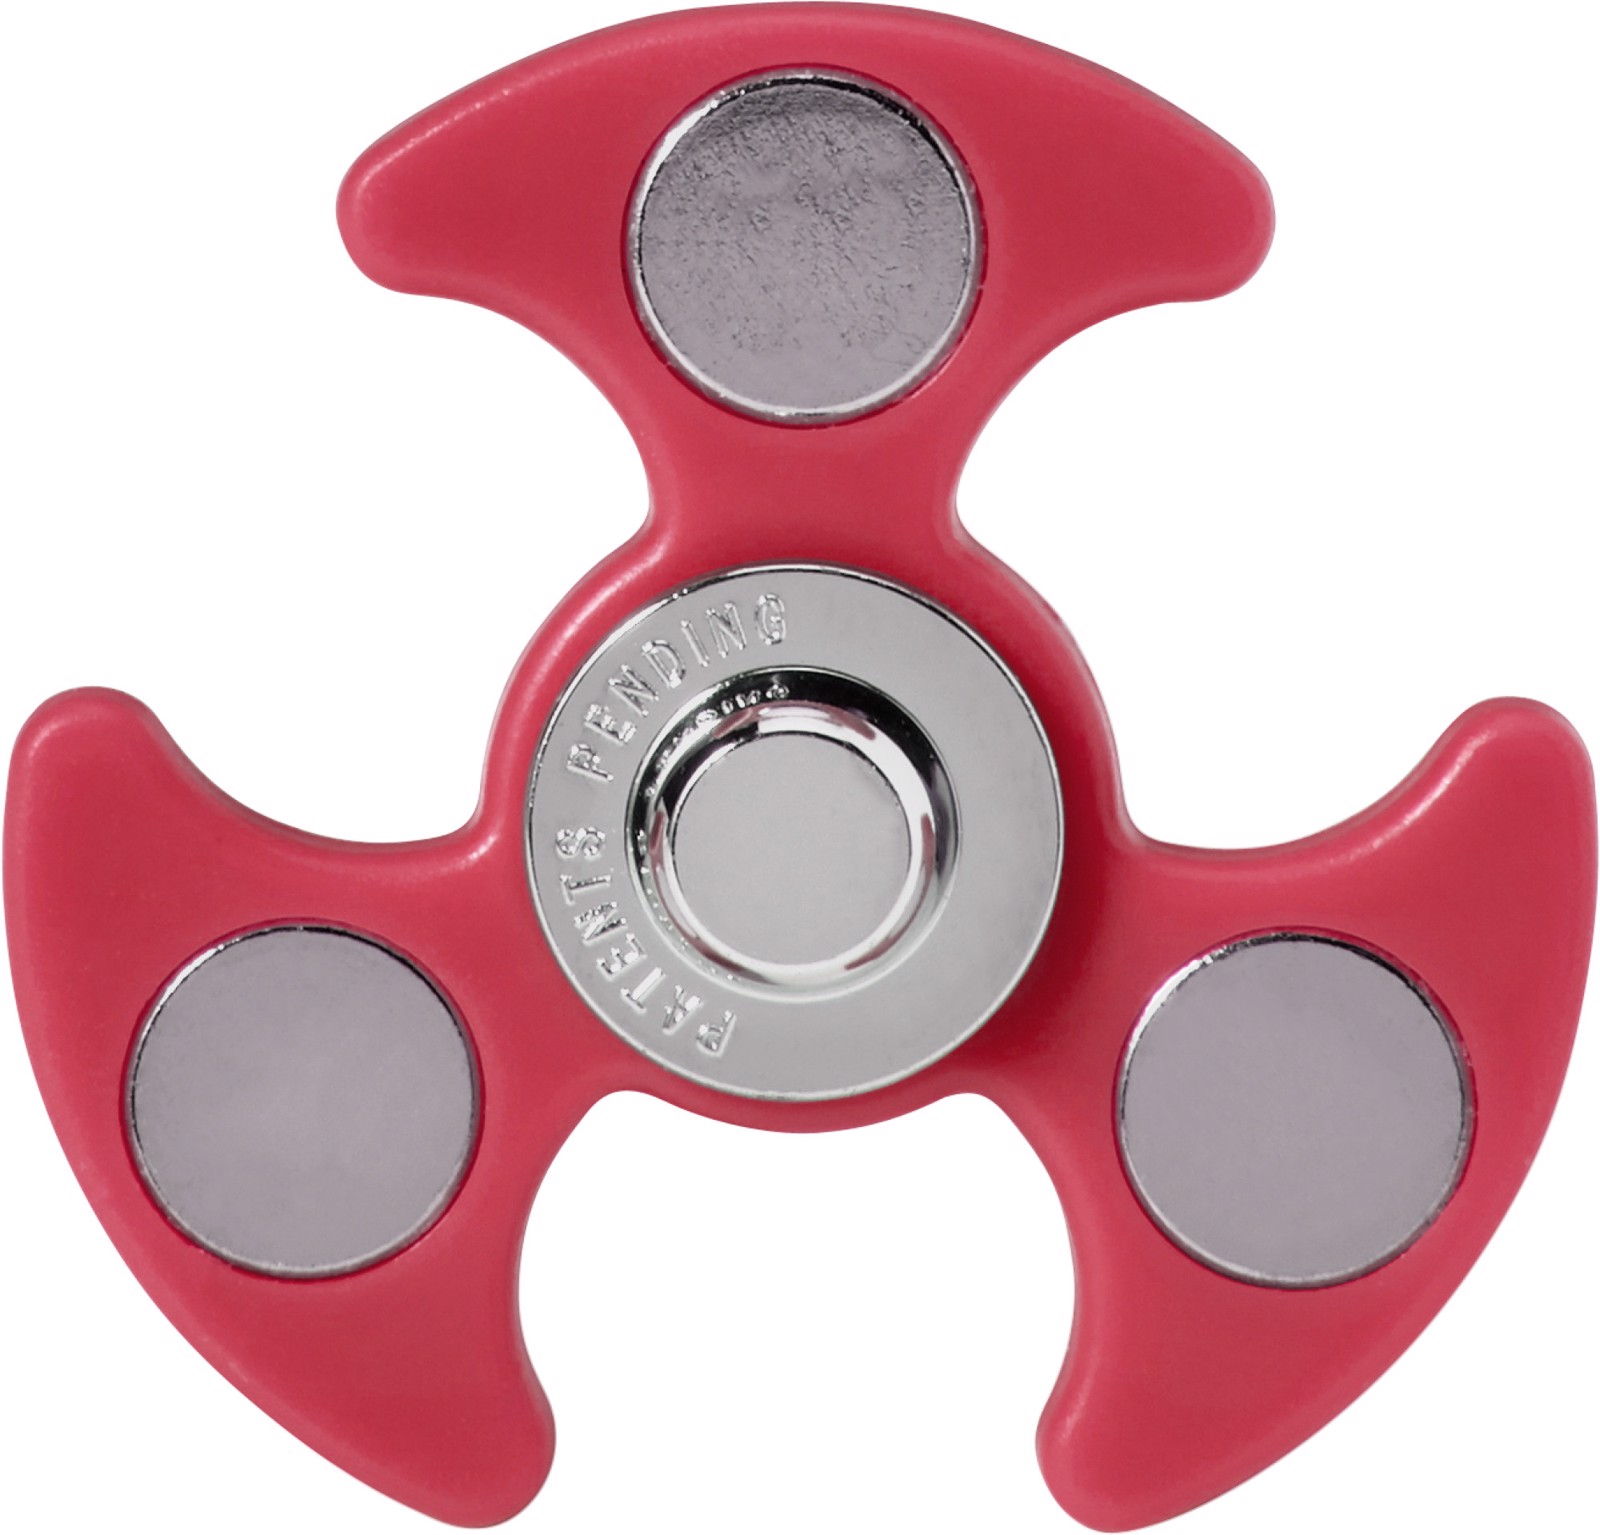 ABS spinner pen - Red